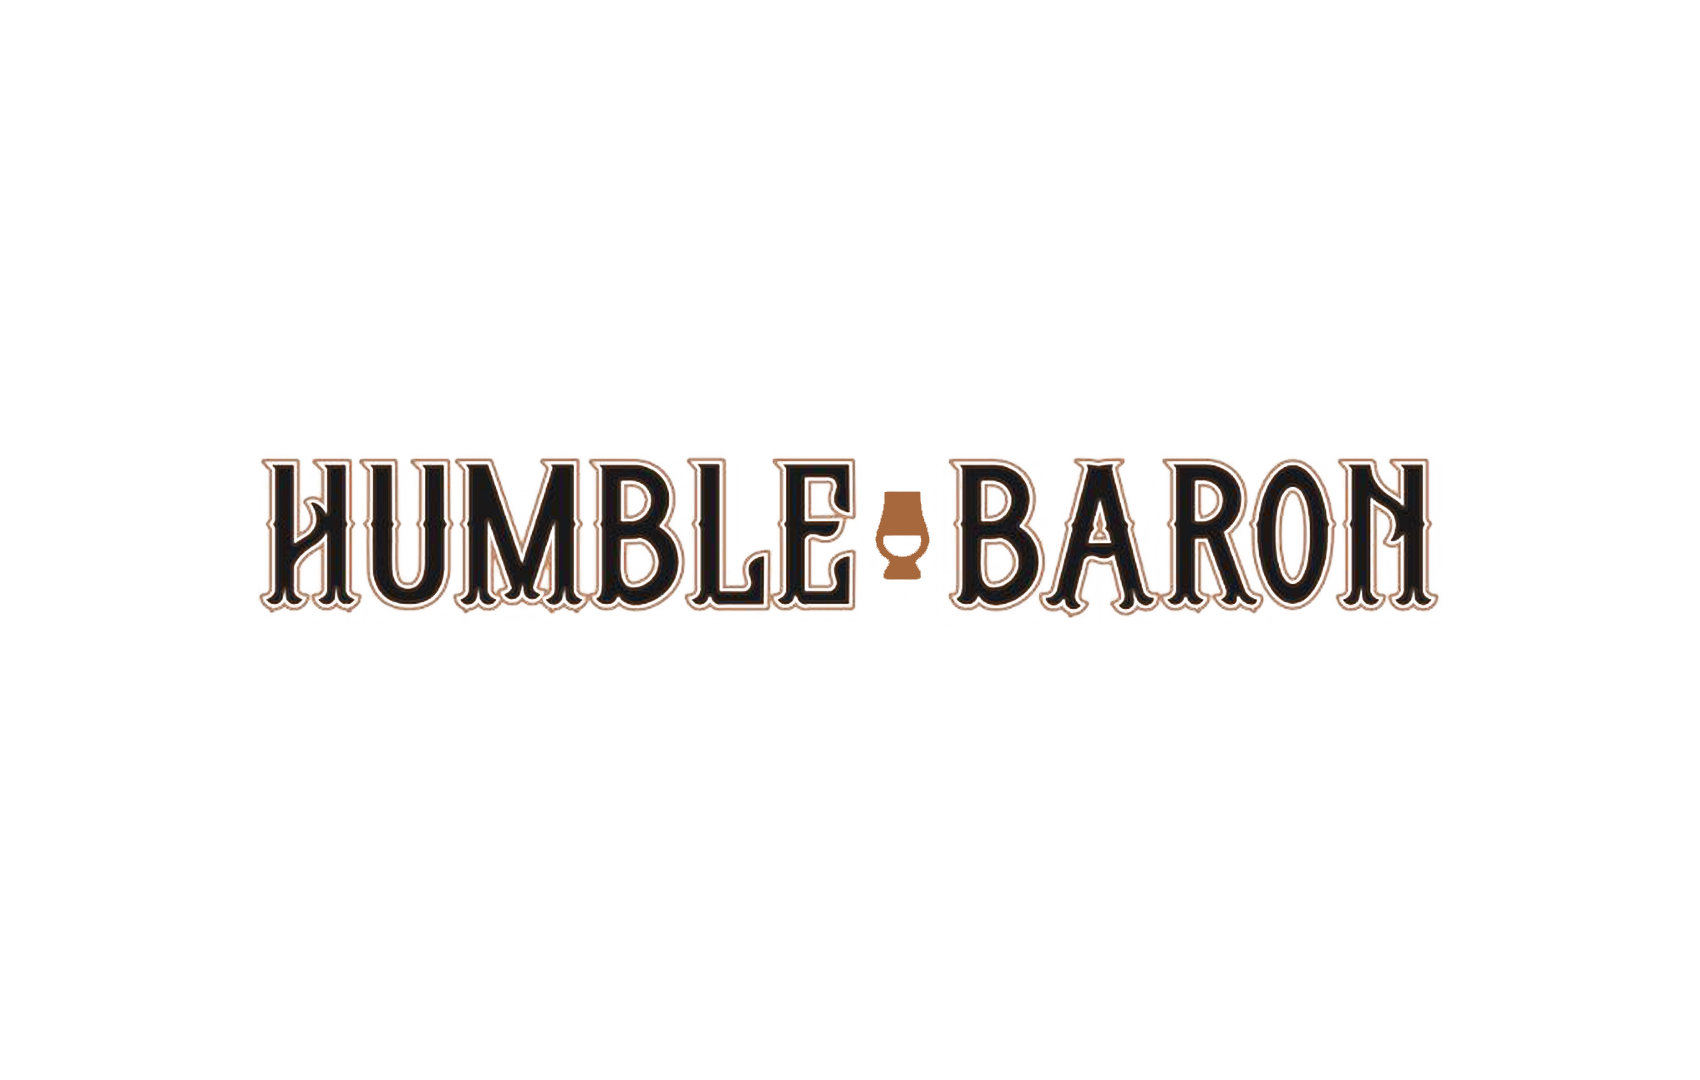 Humble Baron